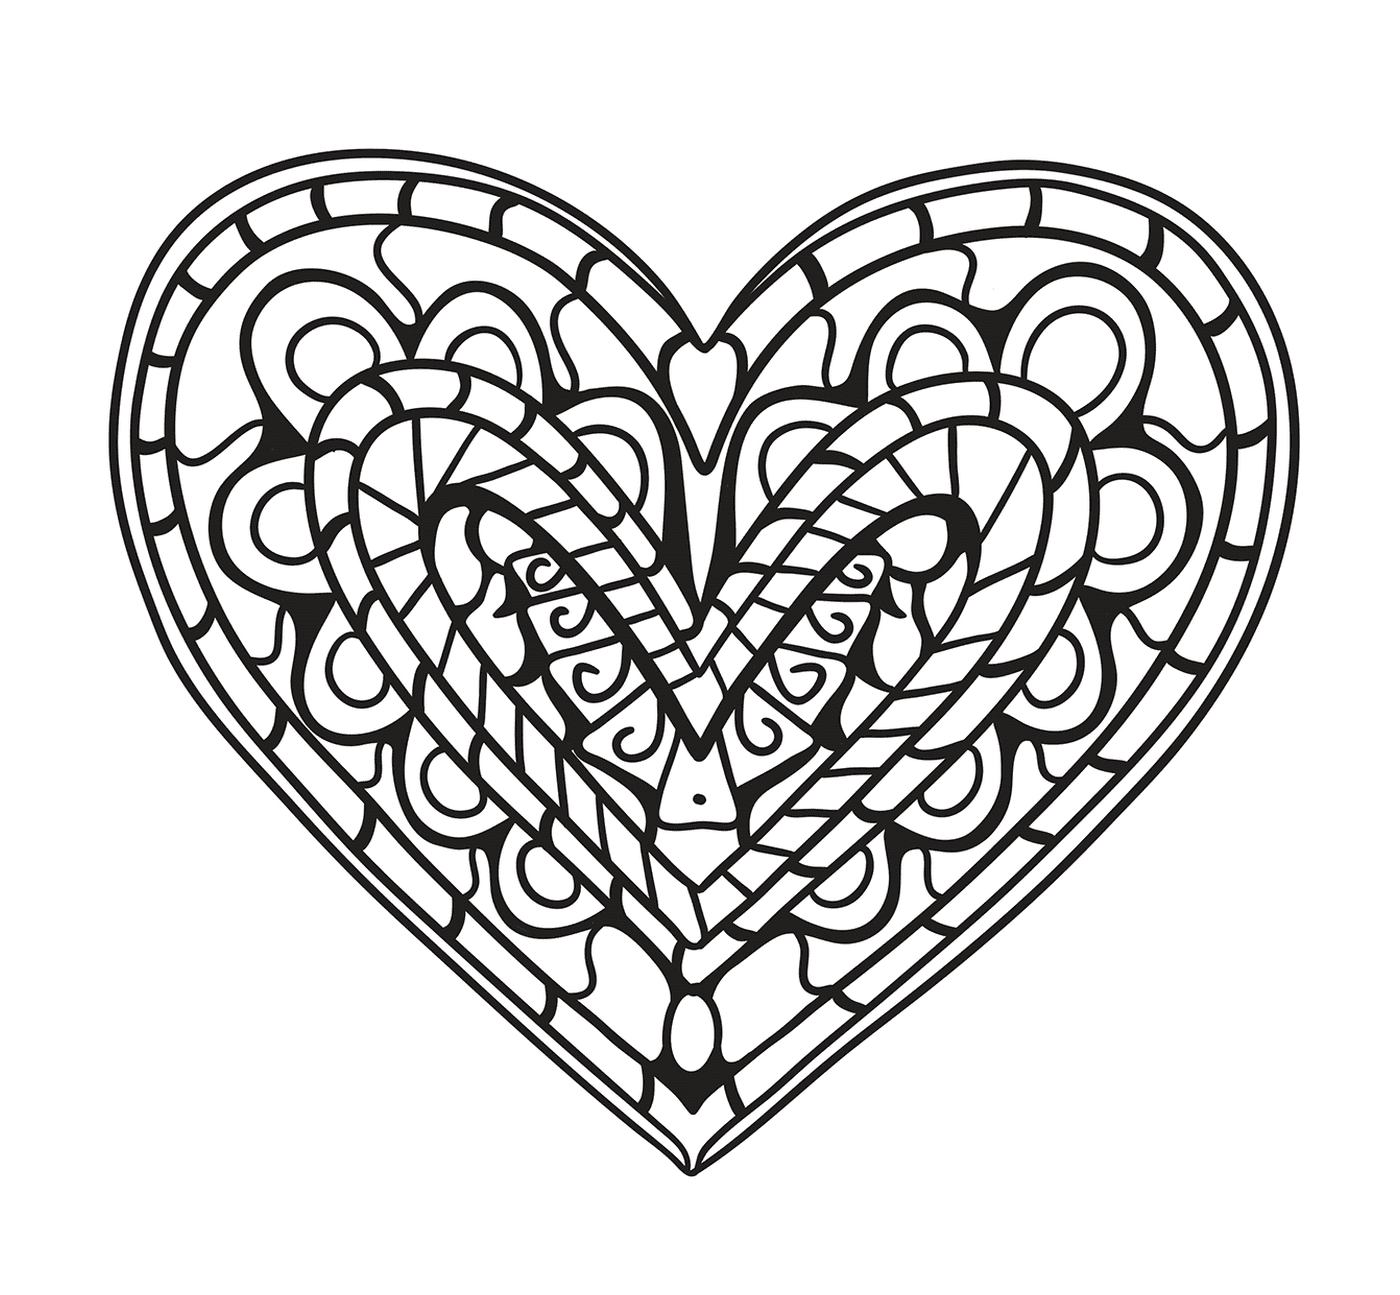  Heart zentangle delicately complex 